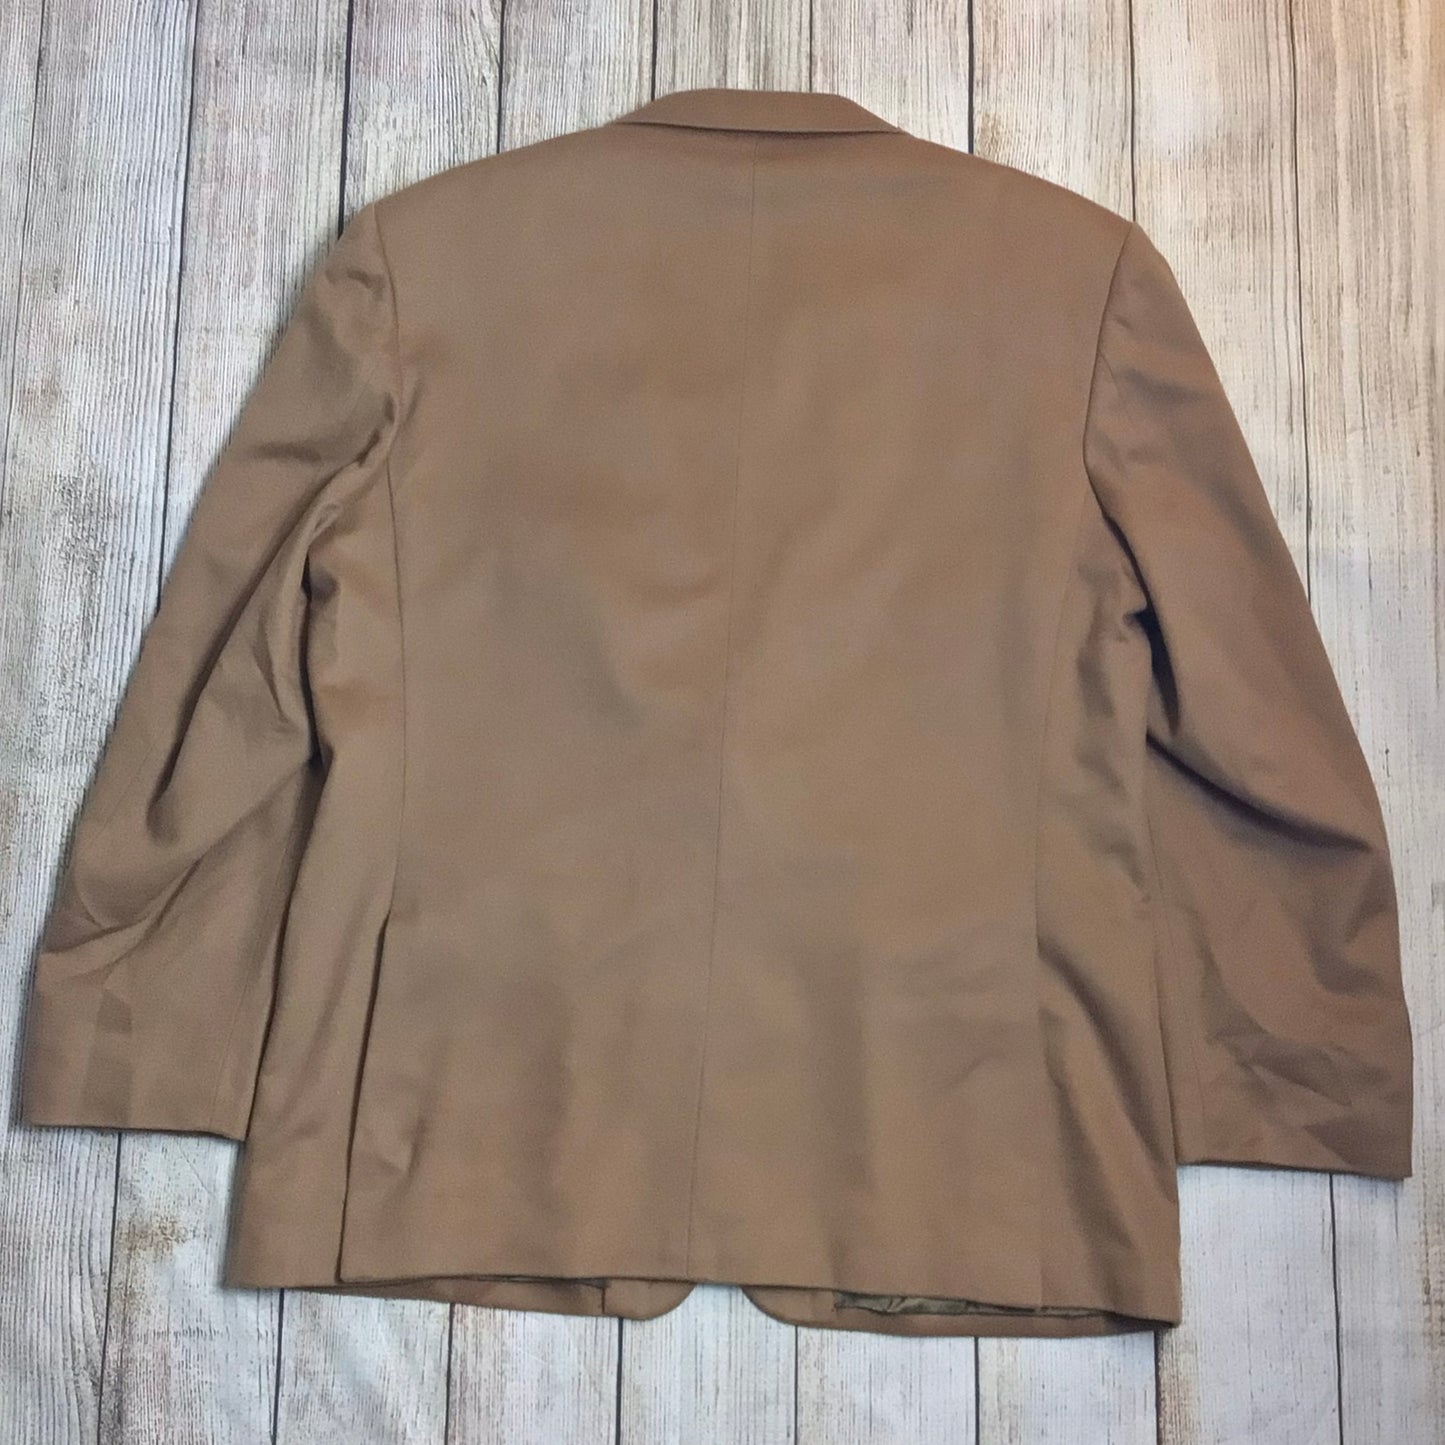 Nobleman Lessona Tan Brown Blazer Jacket 100% Cashmere Size 56